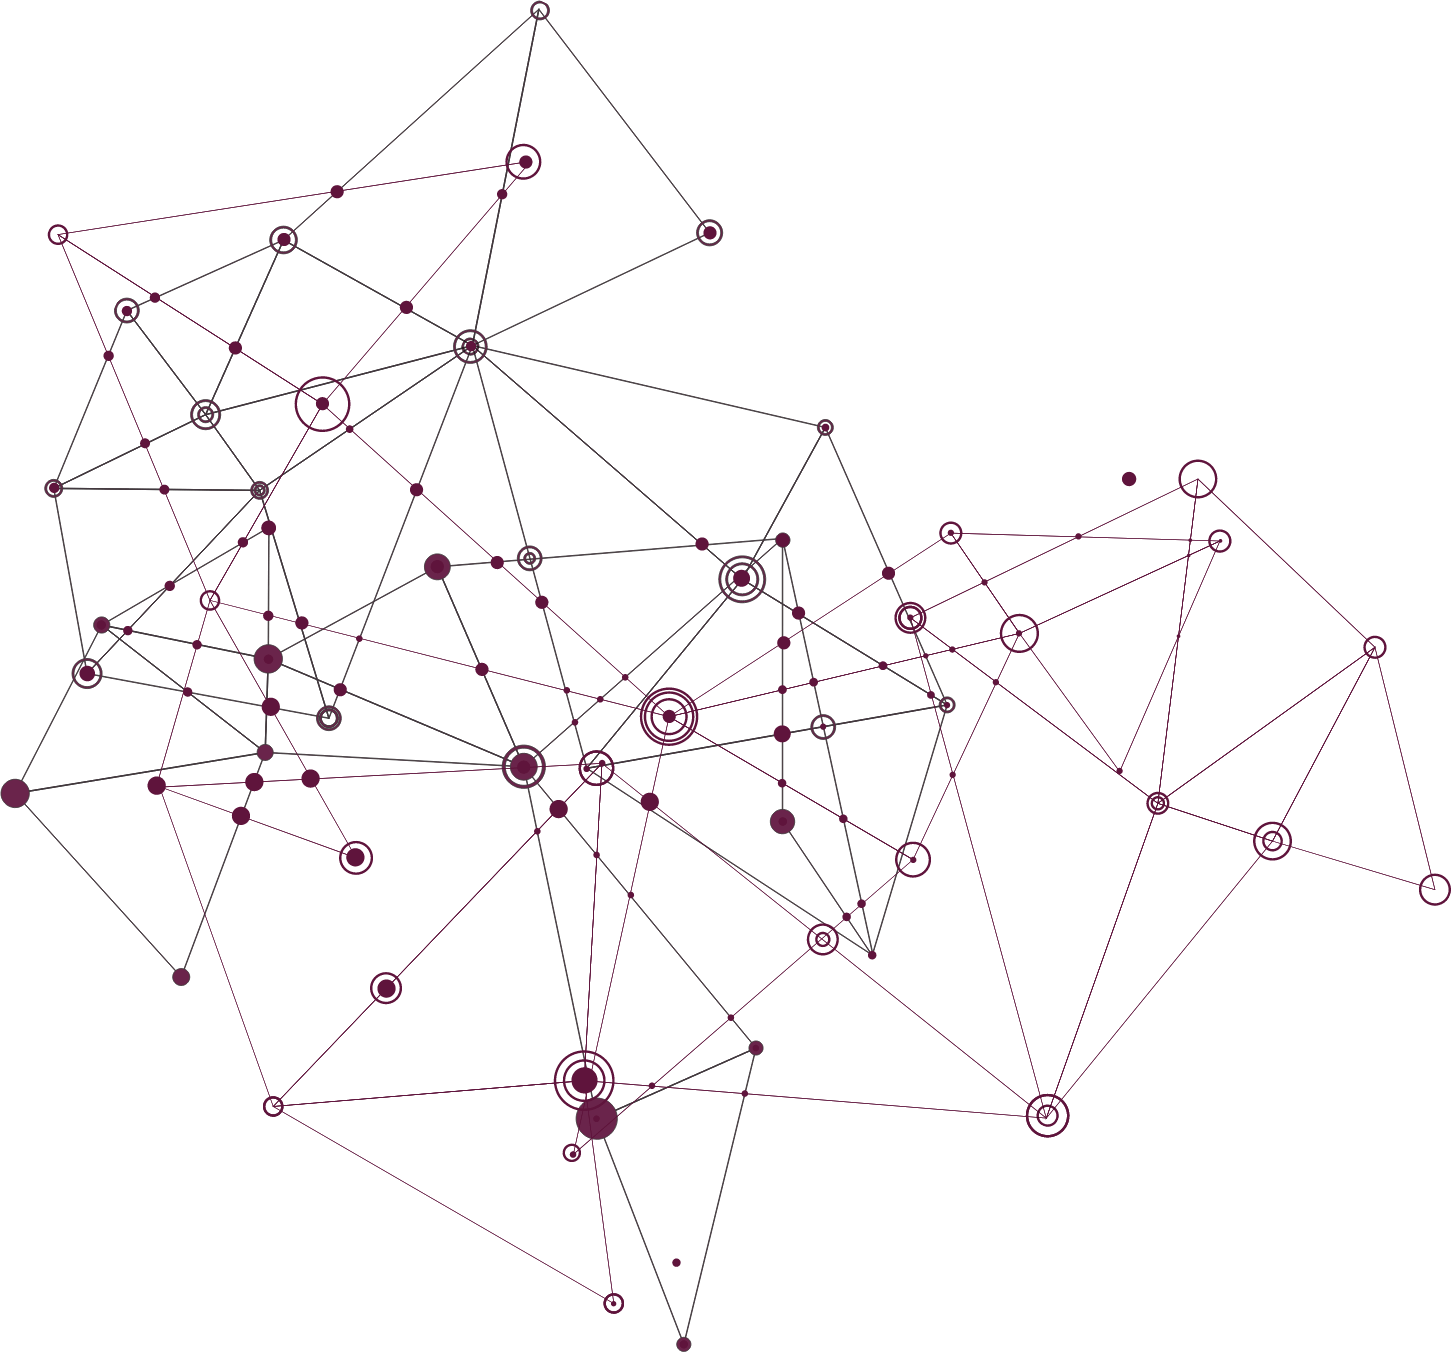 A network illustration